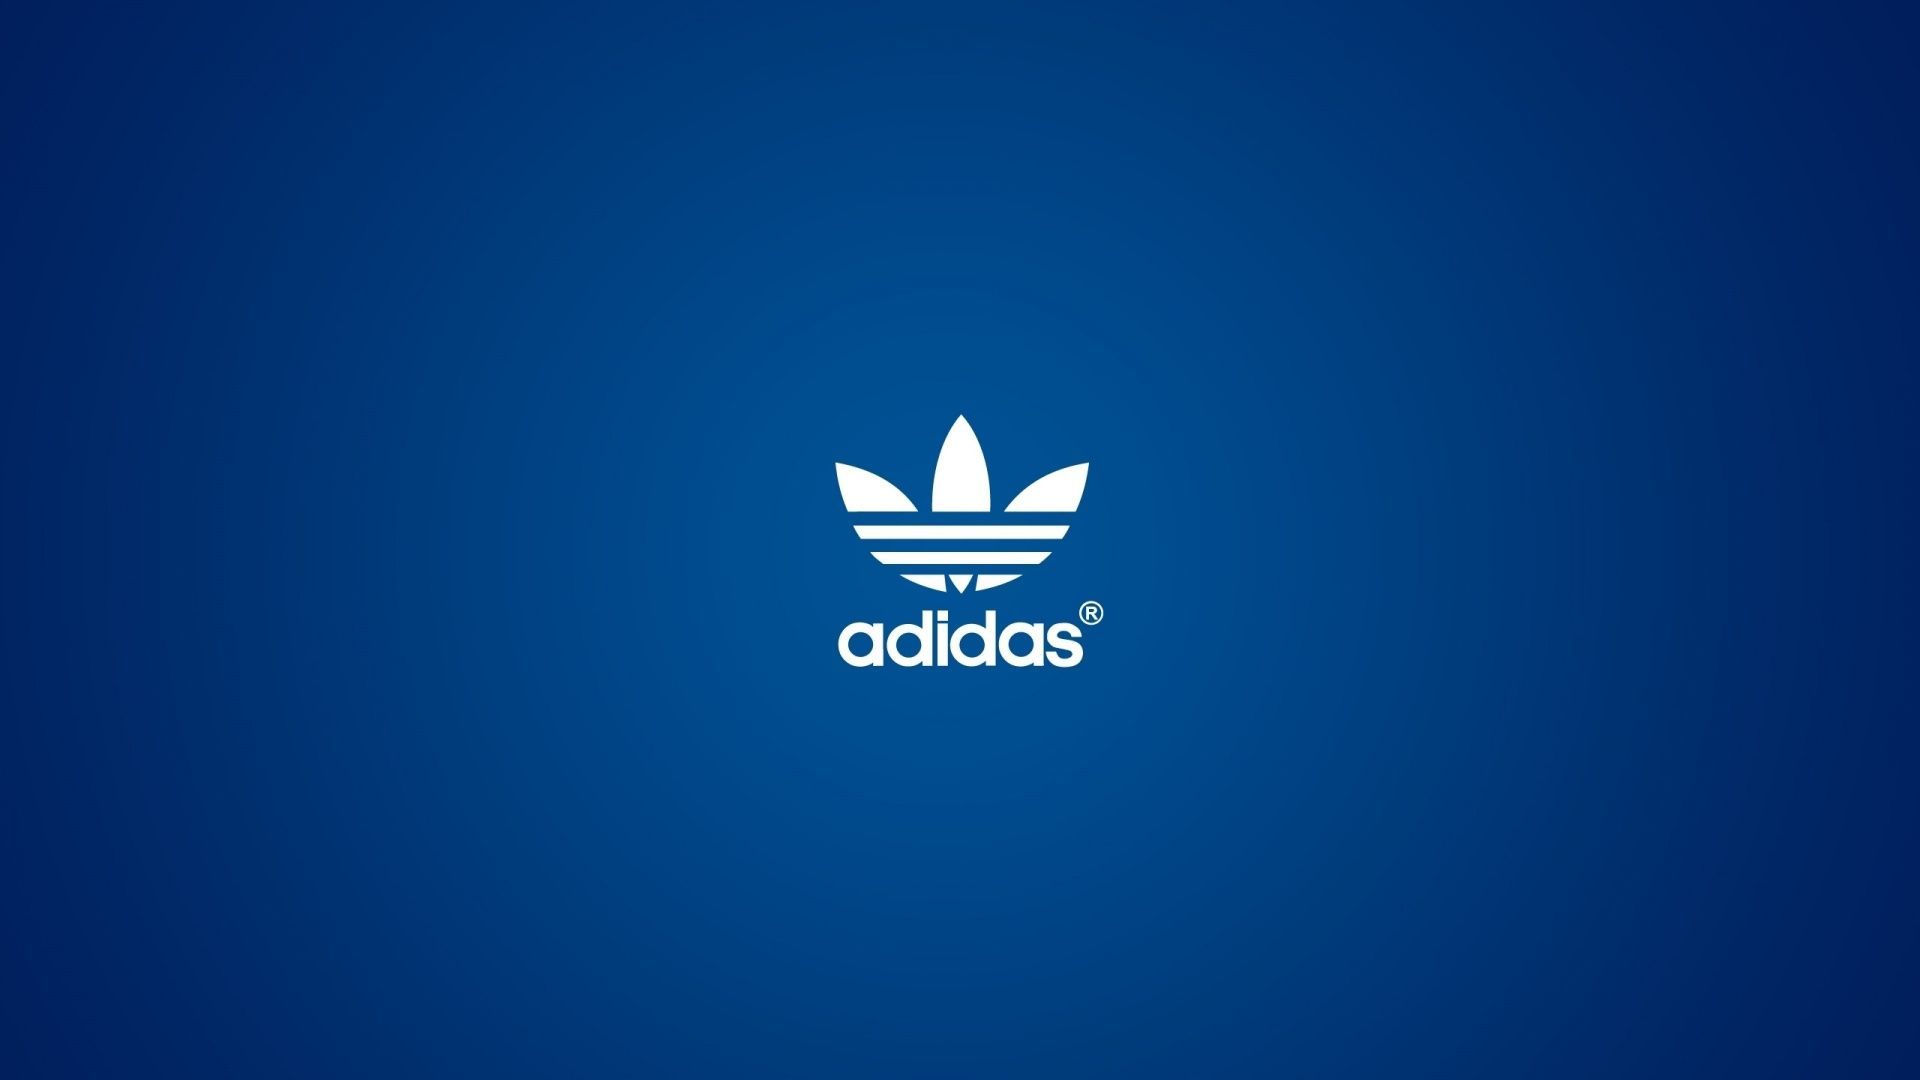 New-HD-Adidas-Blue-Logo-Wallpaper.jpg